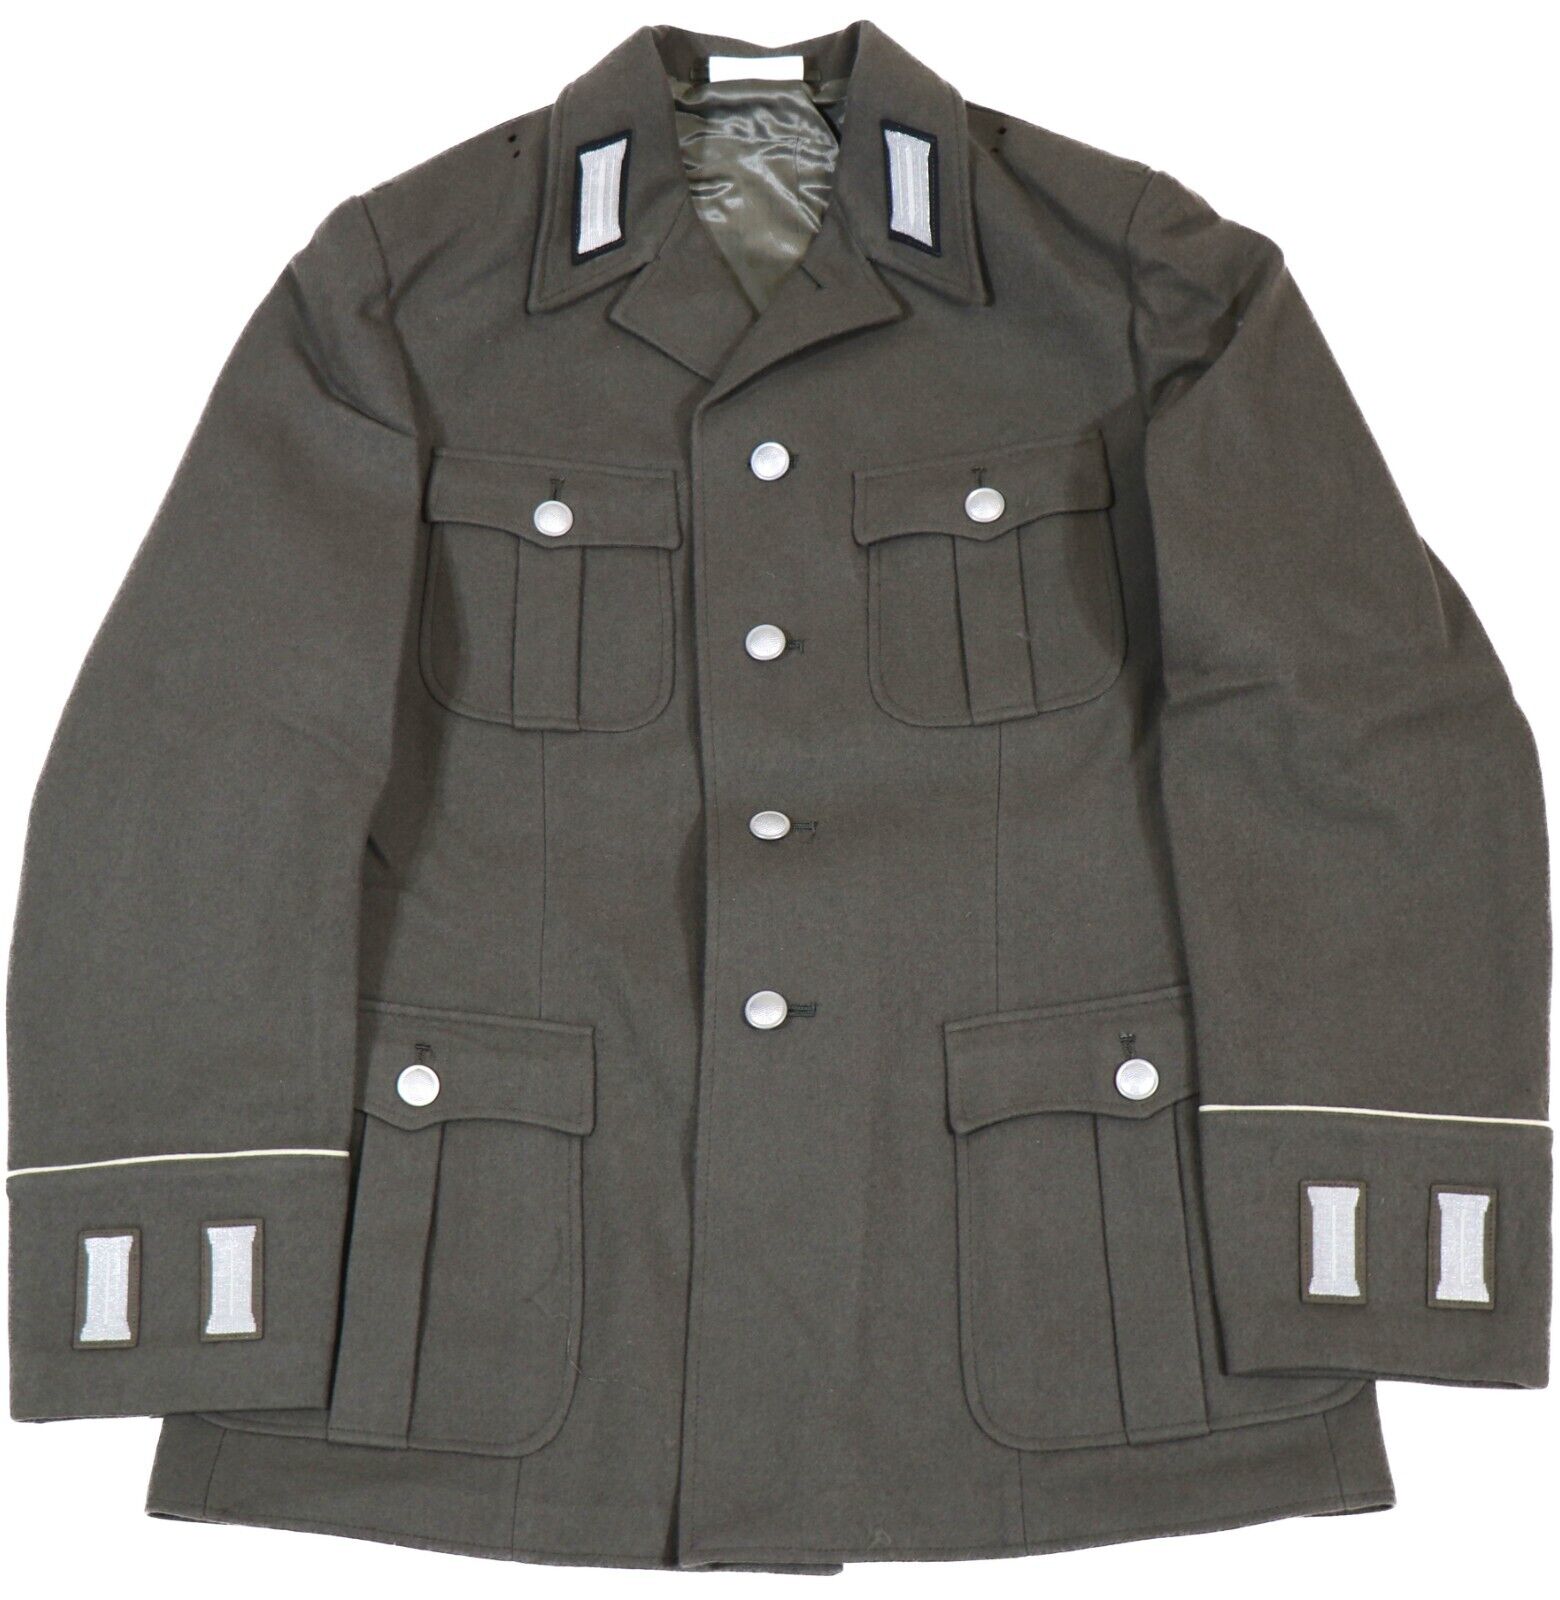 Medium G48 - East German NVA DDR Grey Officer Wool Military Dress Jacket Tunic